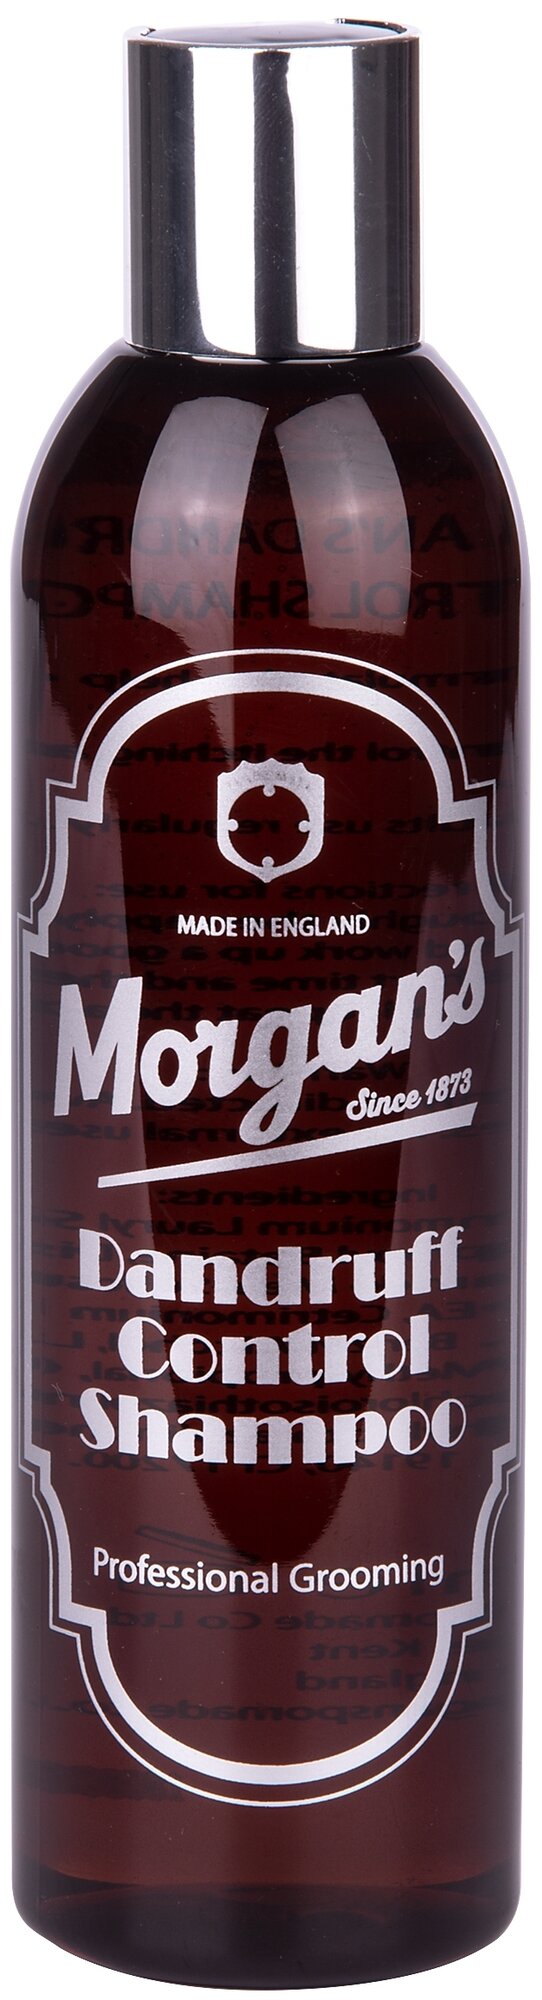 Morgan's шампунь Dandruff Control, 250 мл